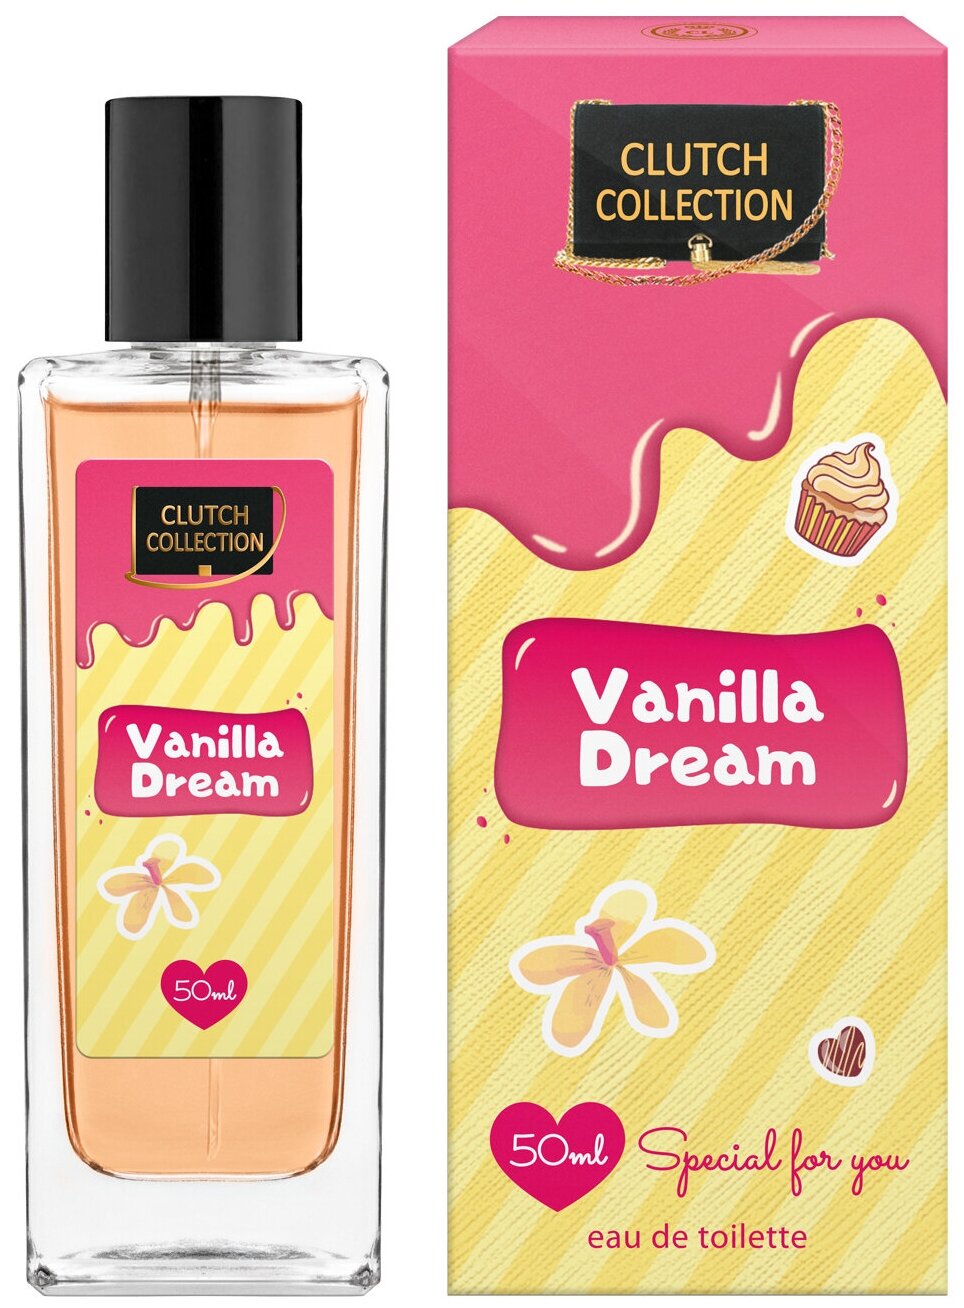 Christine Lavoisier Parfums Clutch Collection Vanilla Dream, Клатч коллекшн Ванила Дрим, духи женские, парфюмерия, ваниль, парфюм миниатюра, для молодежи